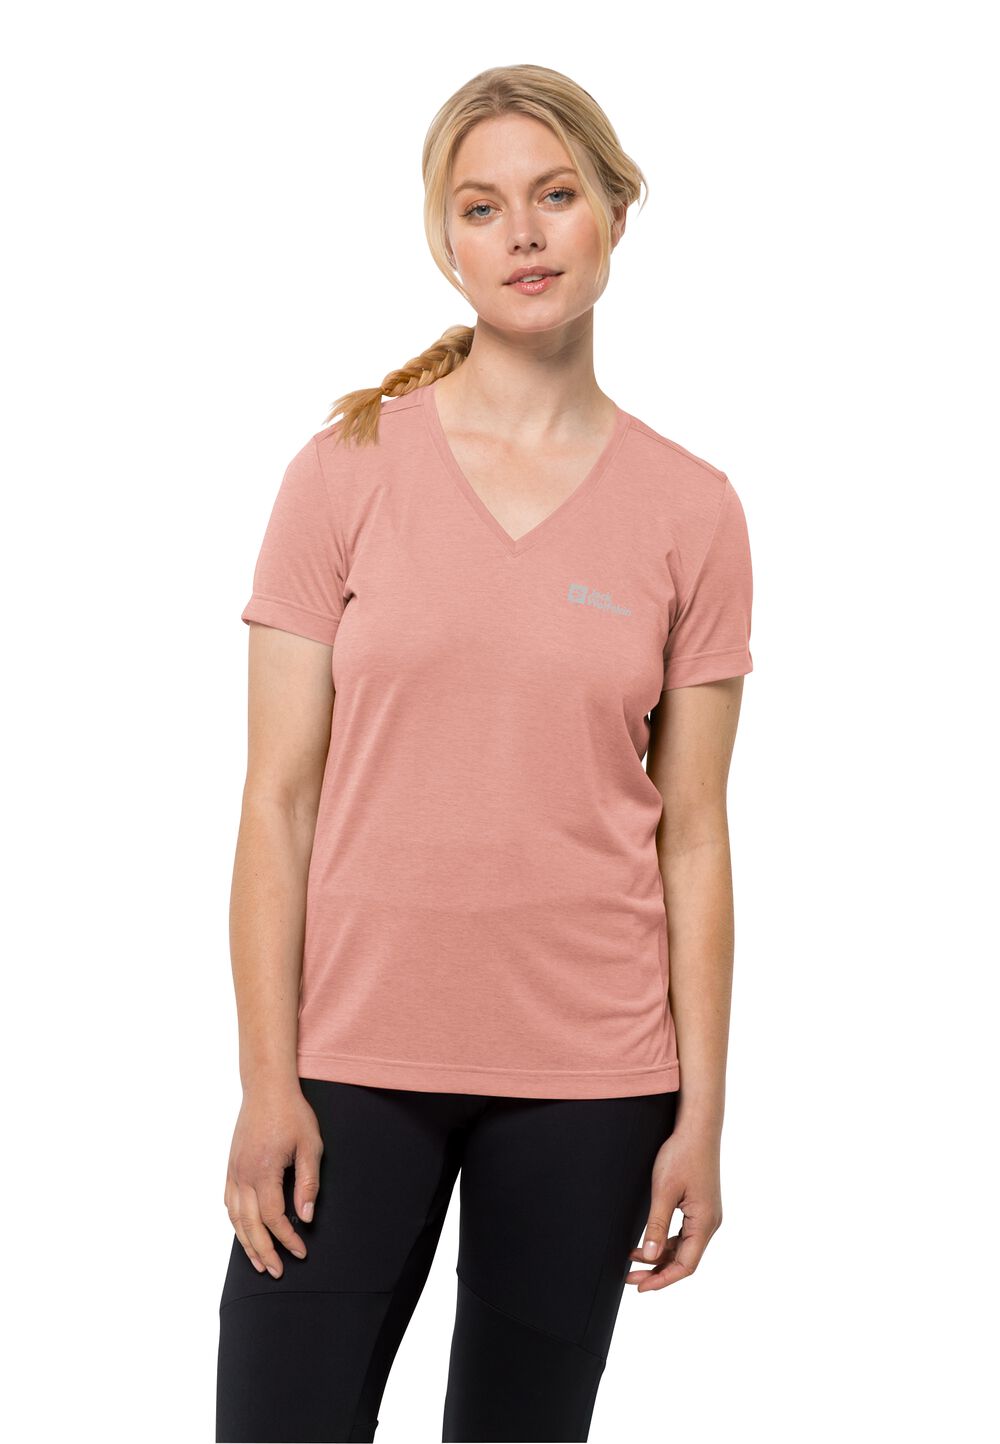 Jack Wolfskin Crosstrail T-Shirt Women Functioneel shirt Dames XS bruin rose dawn